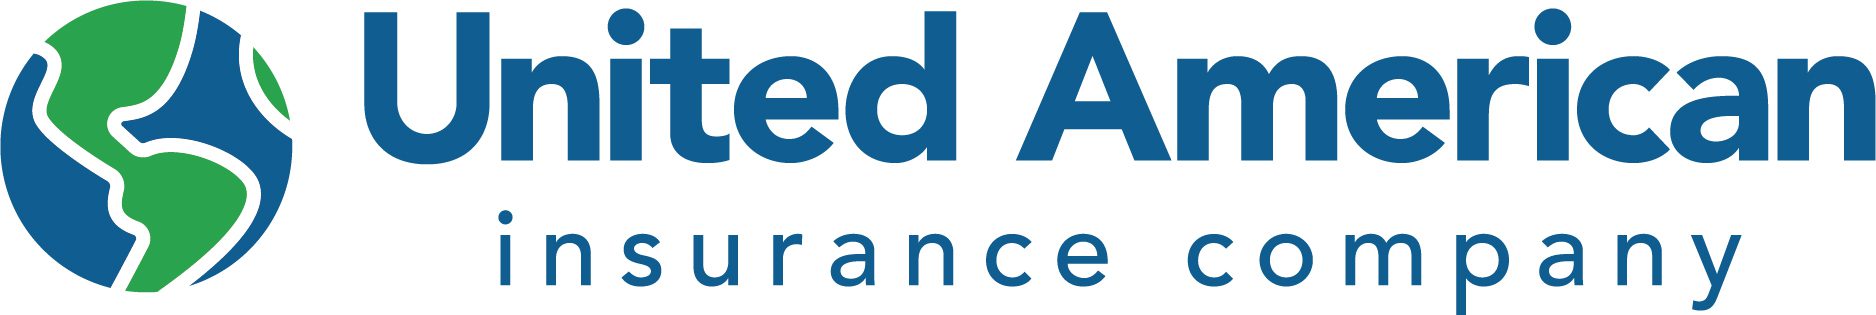 United American Insurance Company Logo